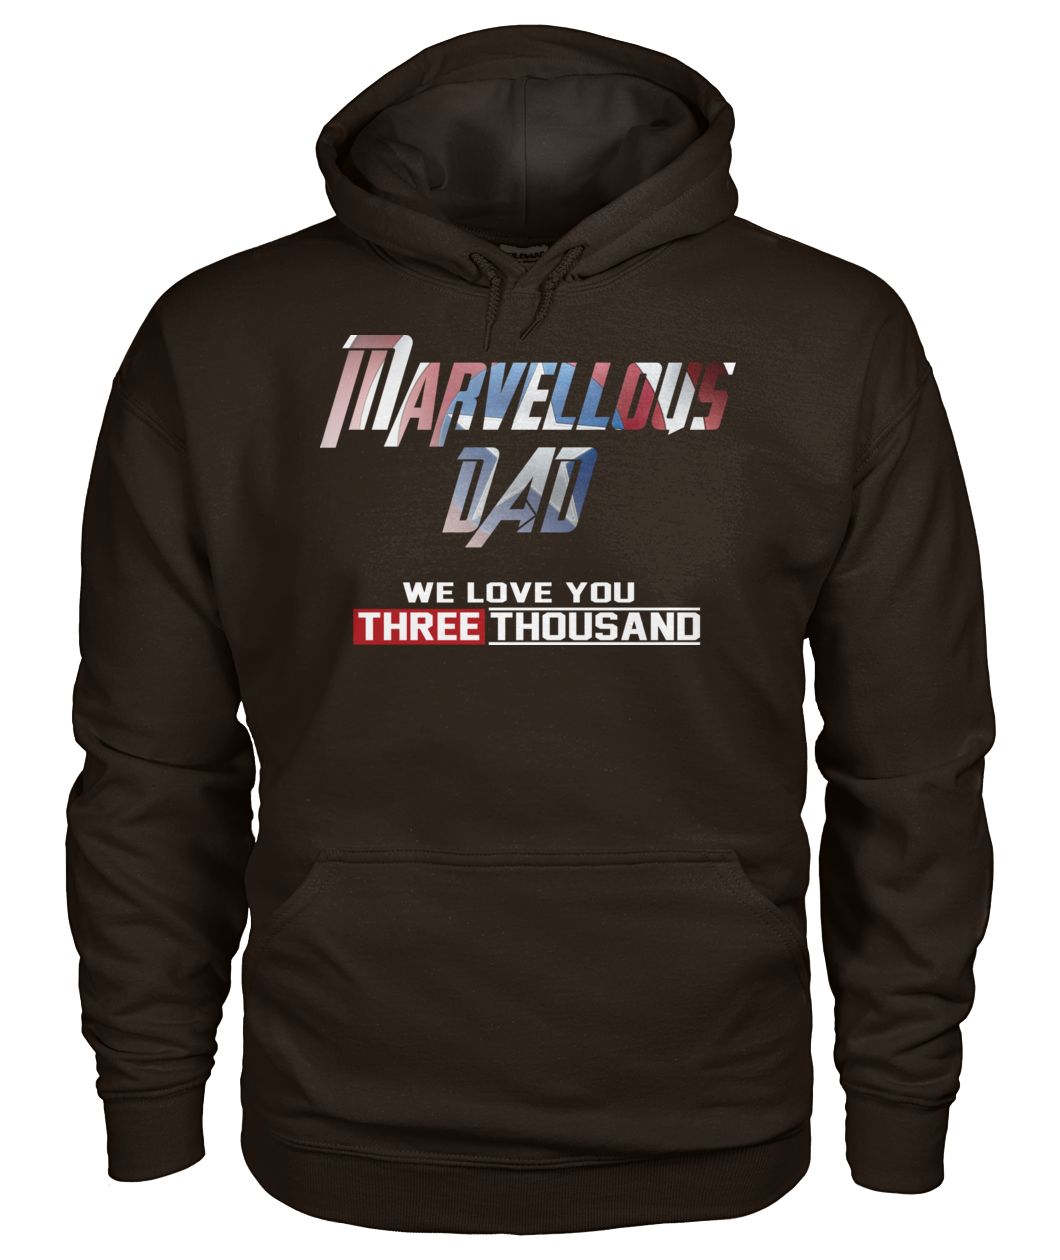 Marvel avengers marvellous dad we love you three thousand gildan hoodie